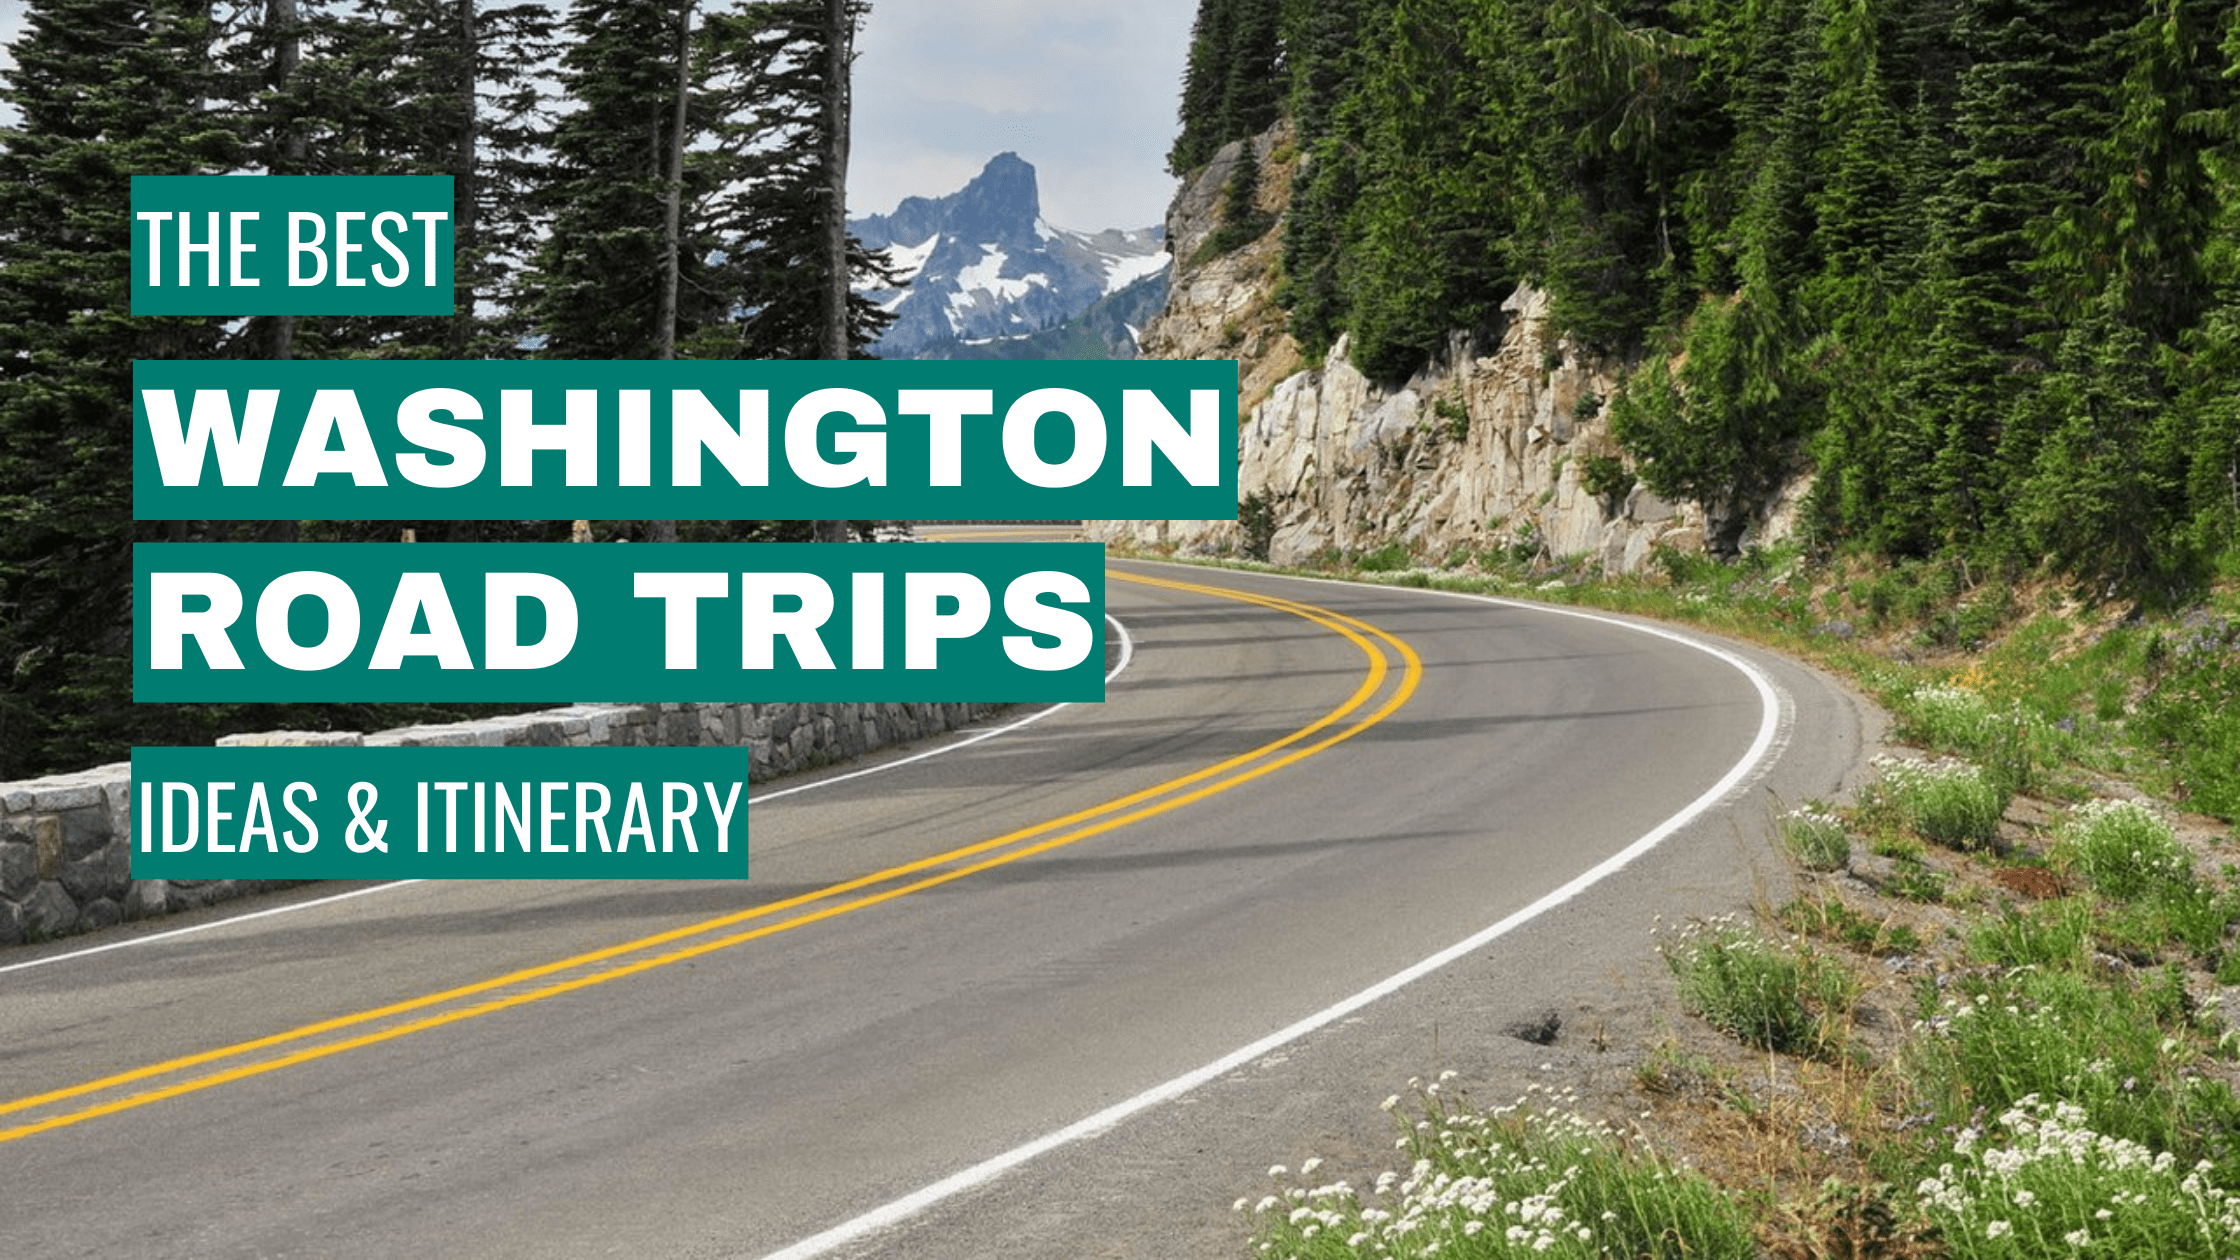 Washington Road Trip Ideas: 11 Best Road Trips + Itinerary